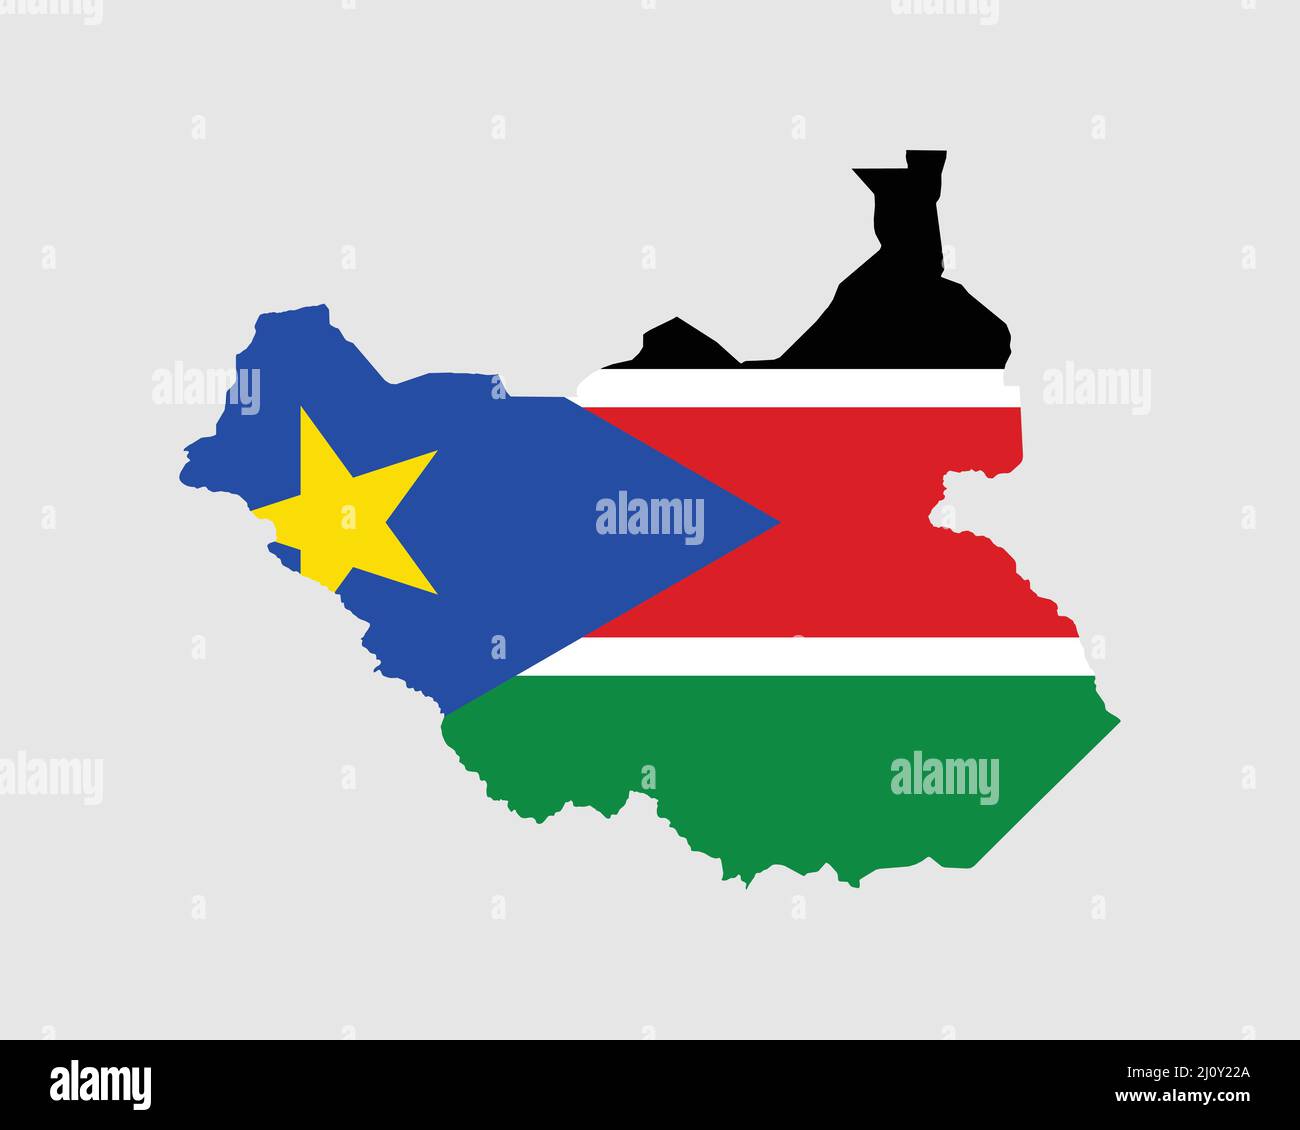 Südsudan Flagge Karte. Karte der Republik Südsudan mit dem südsudanesischen Länderbanner. Vektorgrafik. Stock Vektor